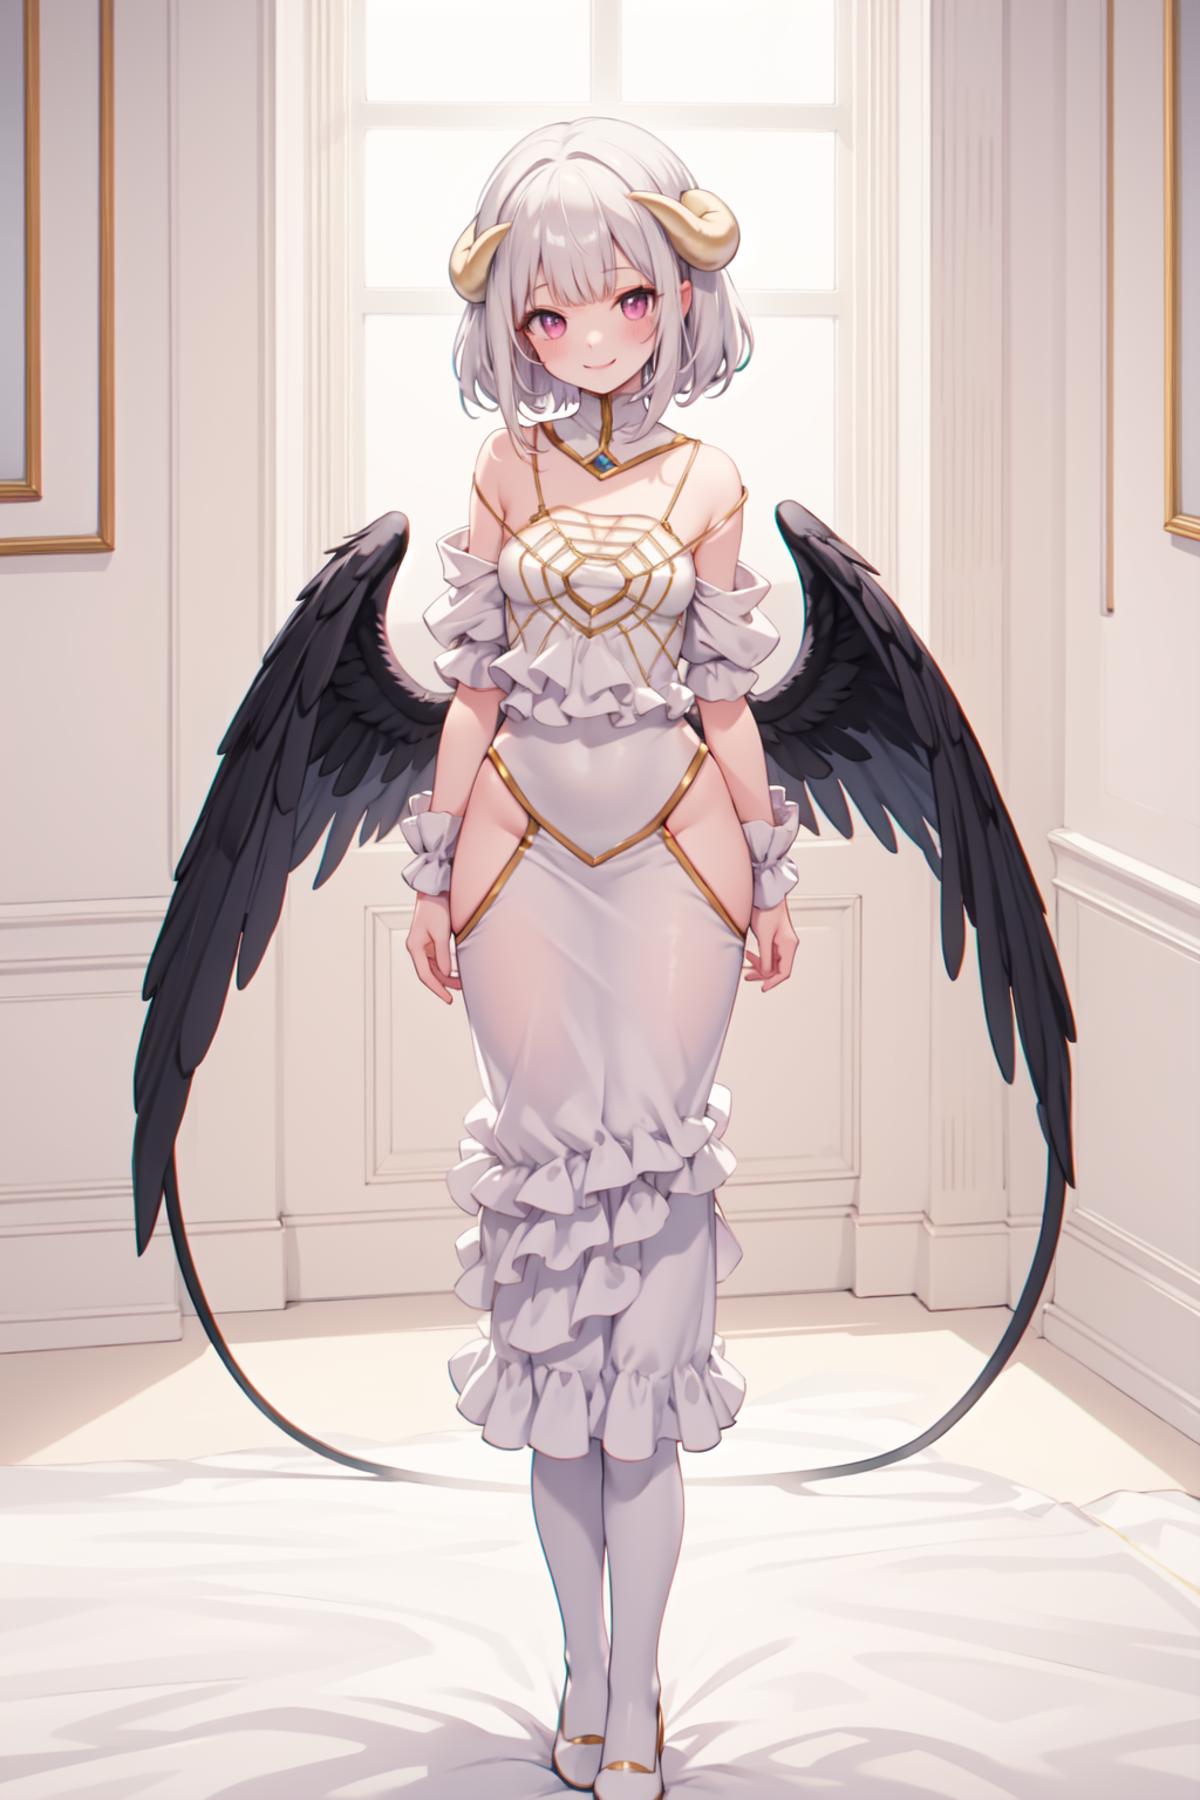 【Costume】【Cosplay】White Dress of Albedo (Overlord) 雅儿贝德的白裙 image by mikuhatsune